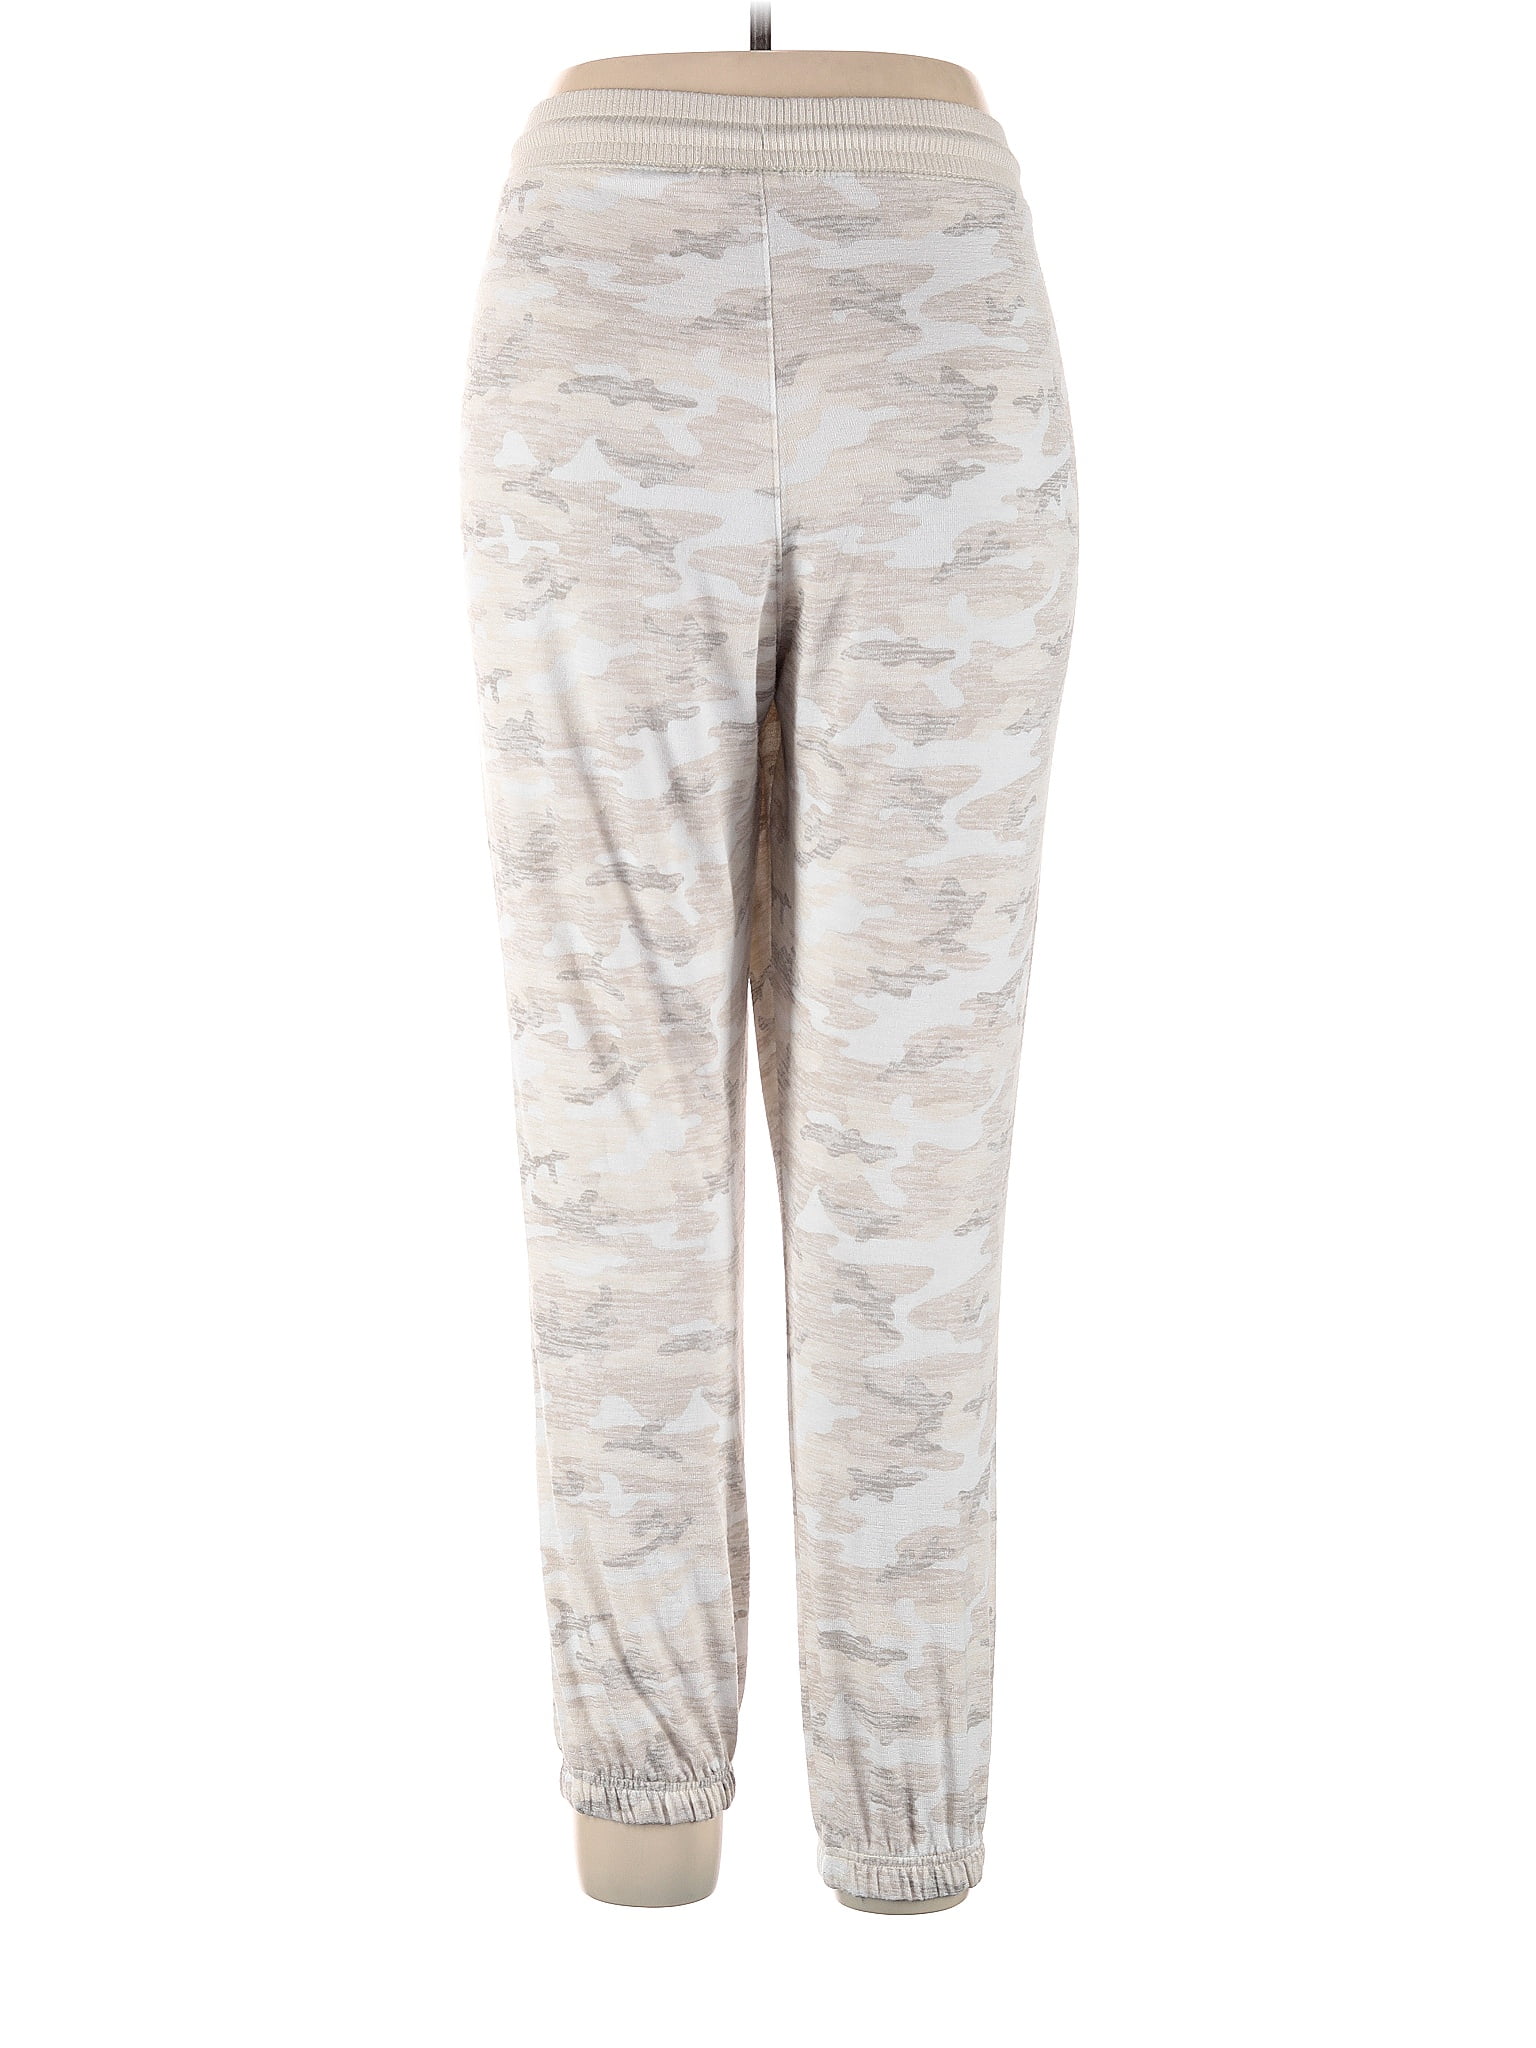 GAIAM Gray Active Pants Size XL - 52% off